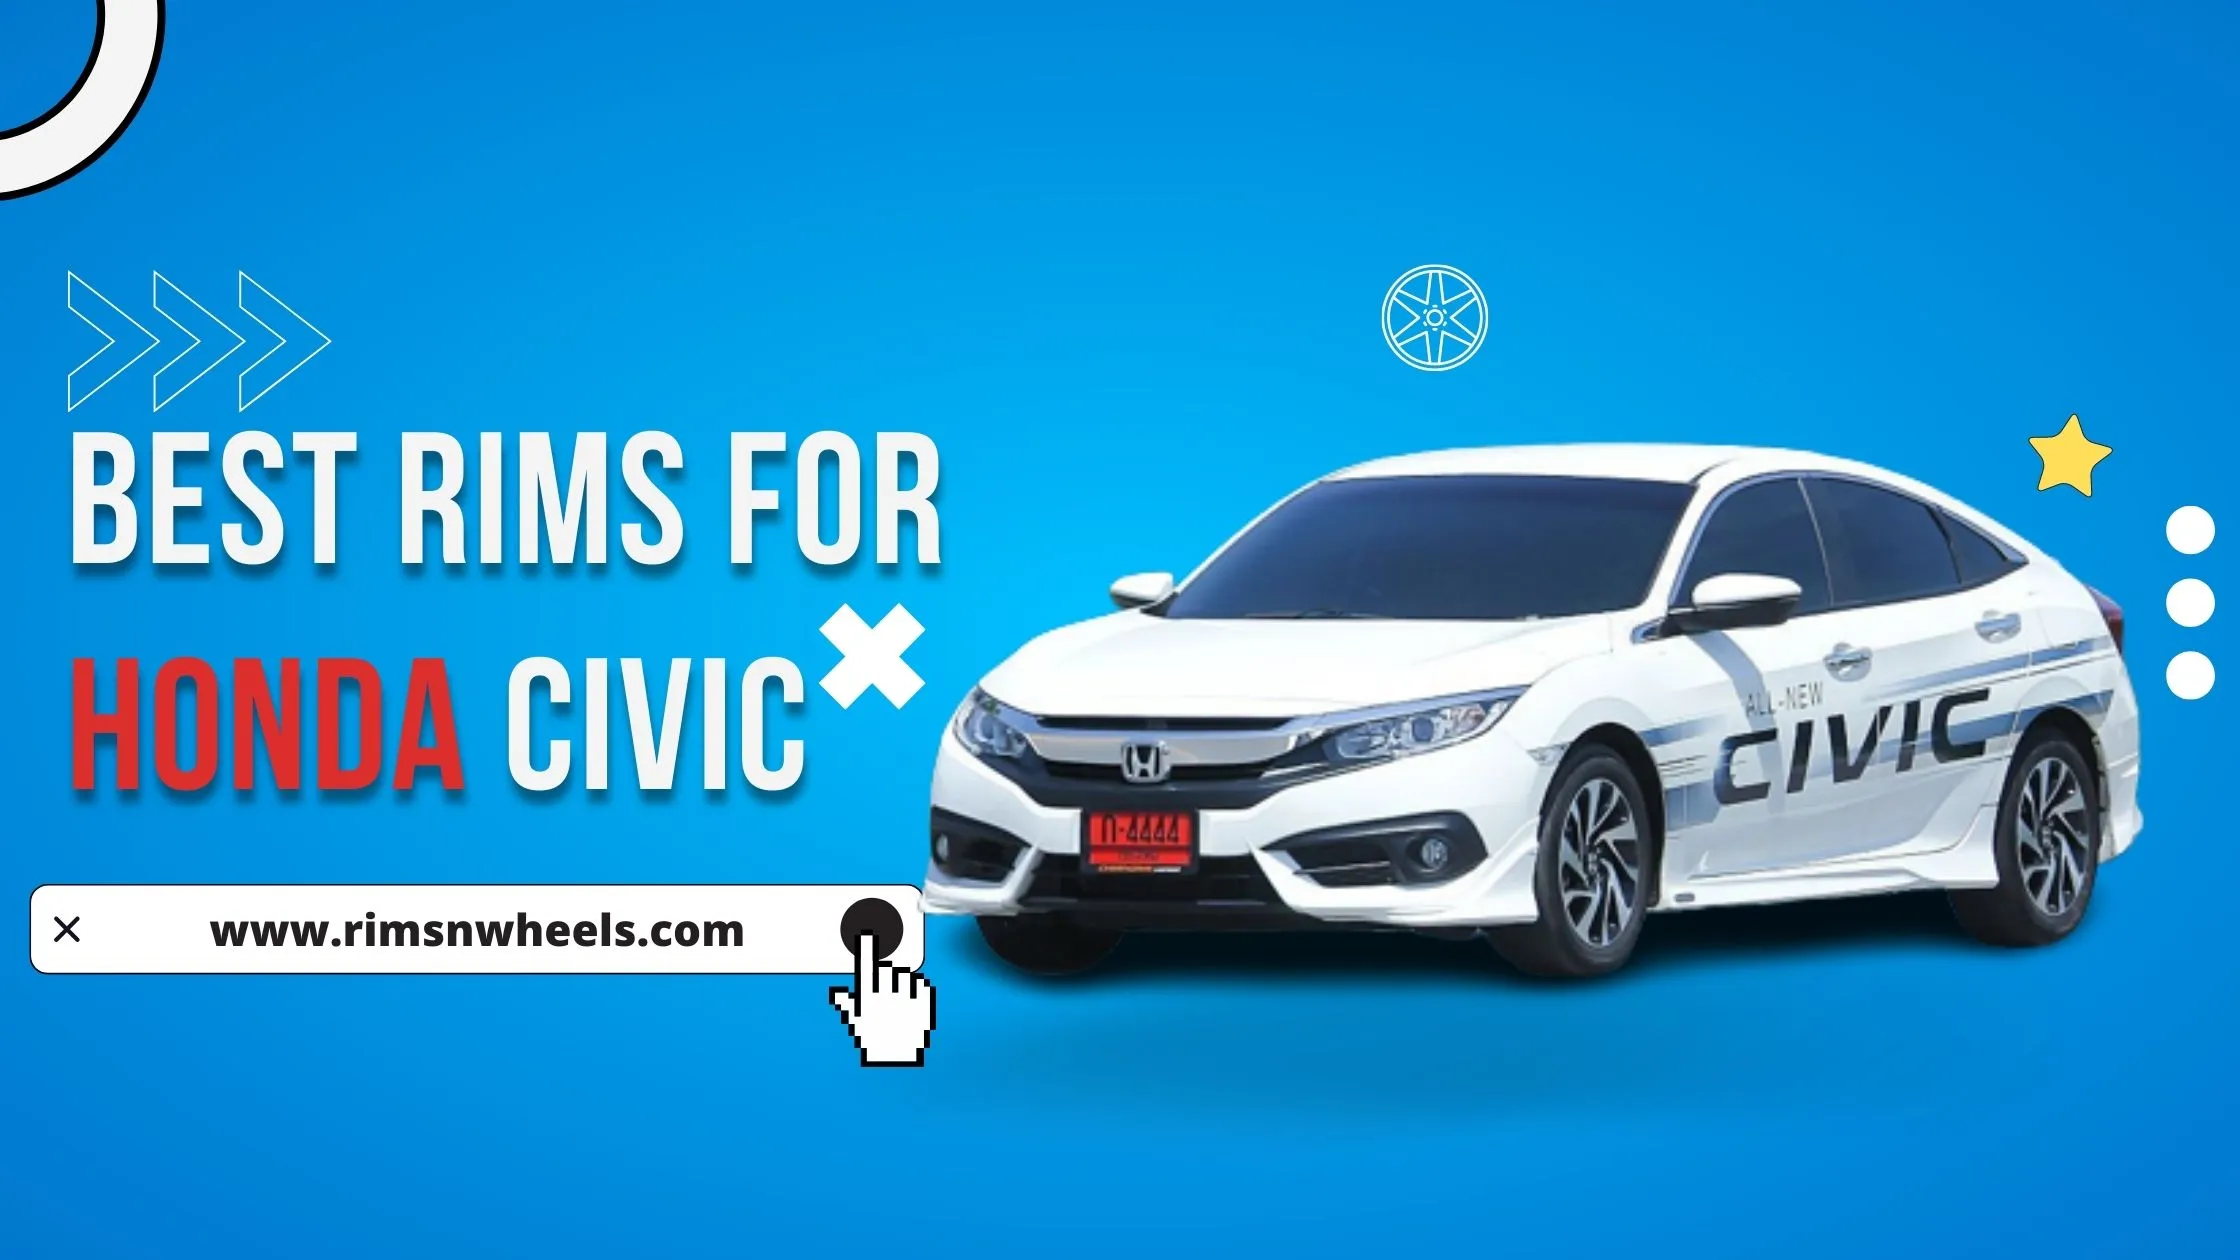 Best Rims For Honda Civic – Top 5 Picks!